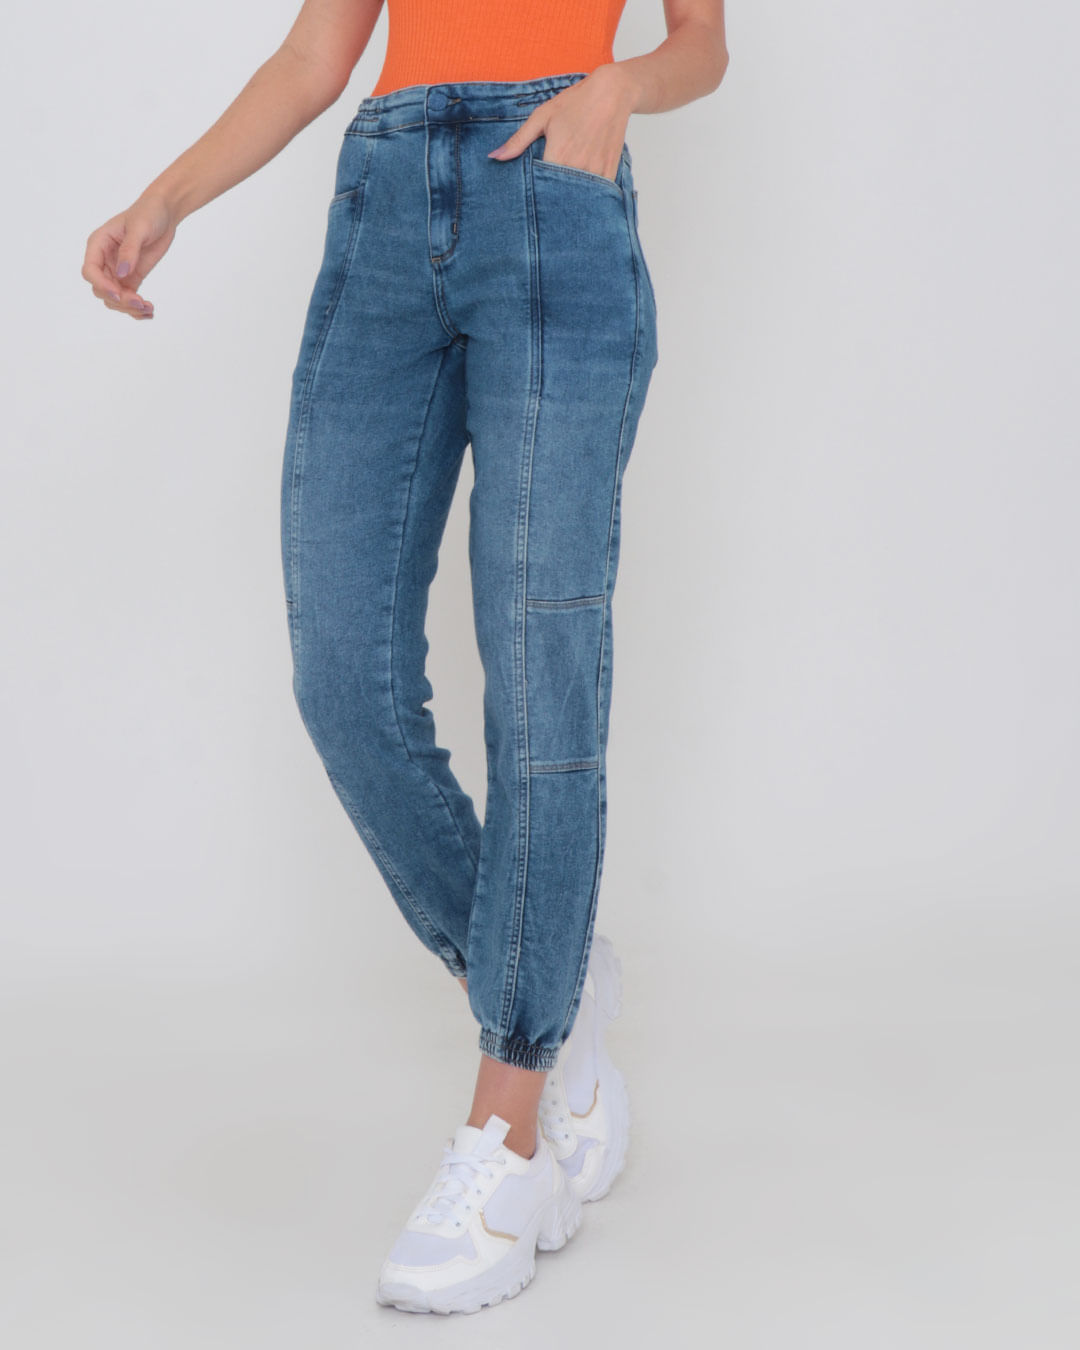 Calca-Jeans-Feminina-Jogger-Nervura-Denim-Azul